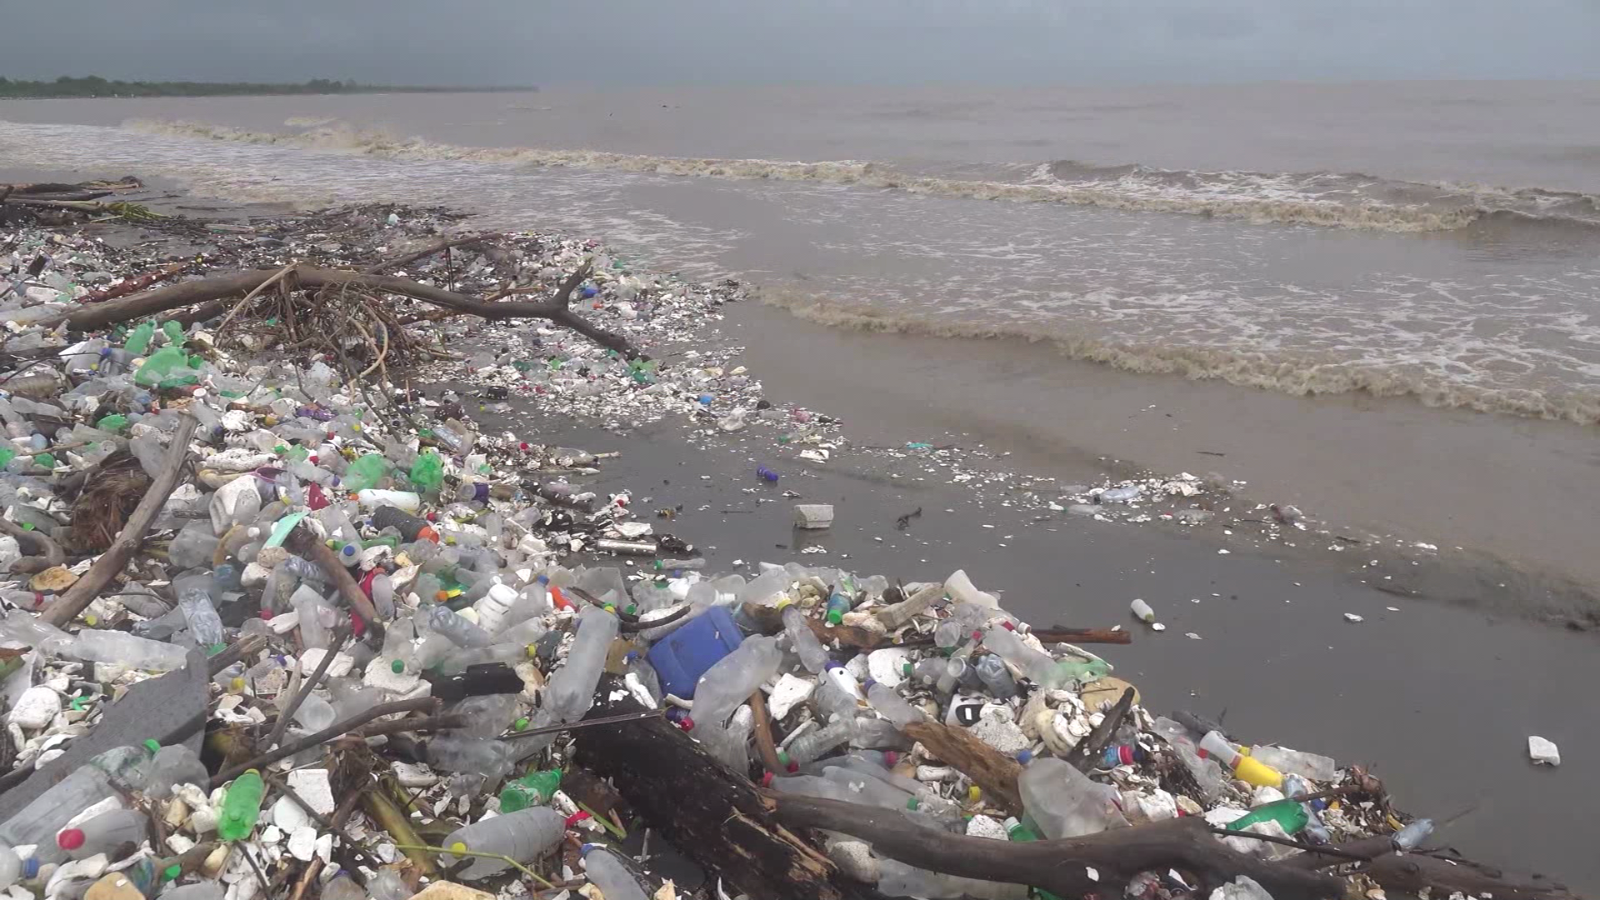 Toneladas de basura inundan playas de Honduras